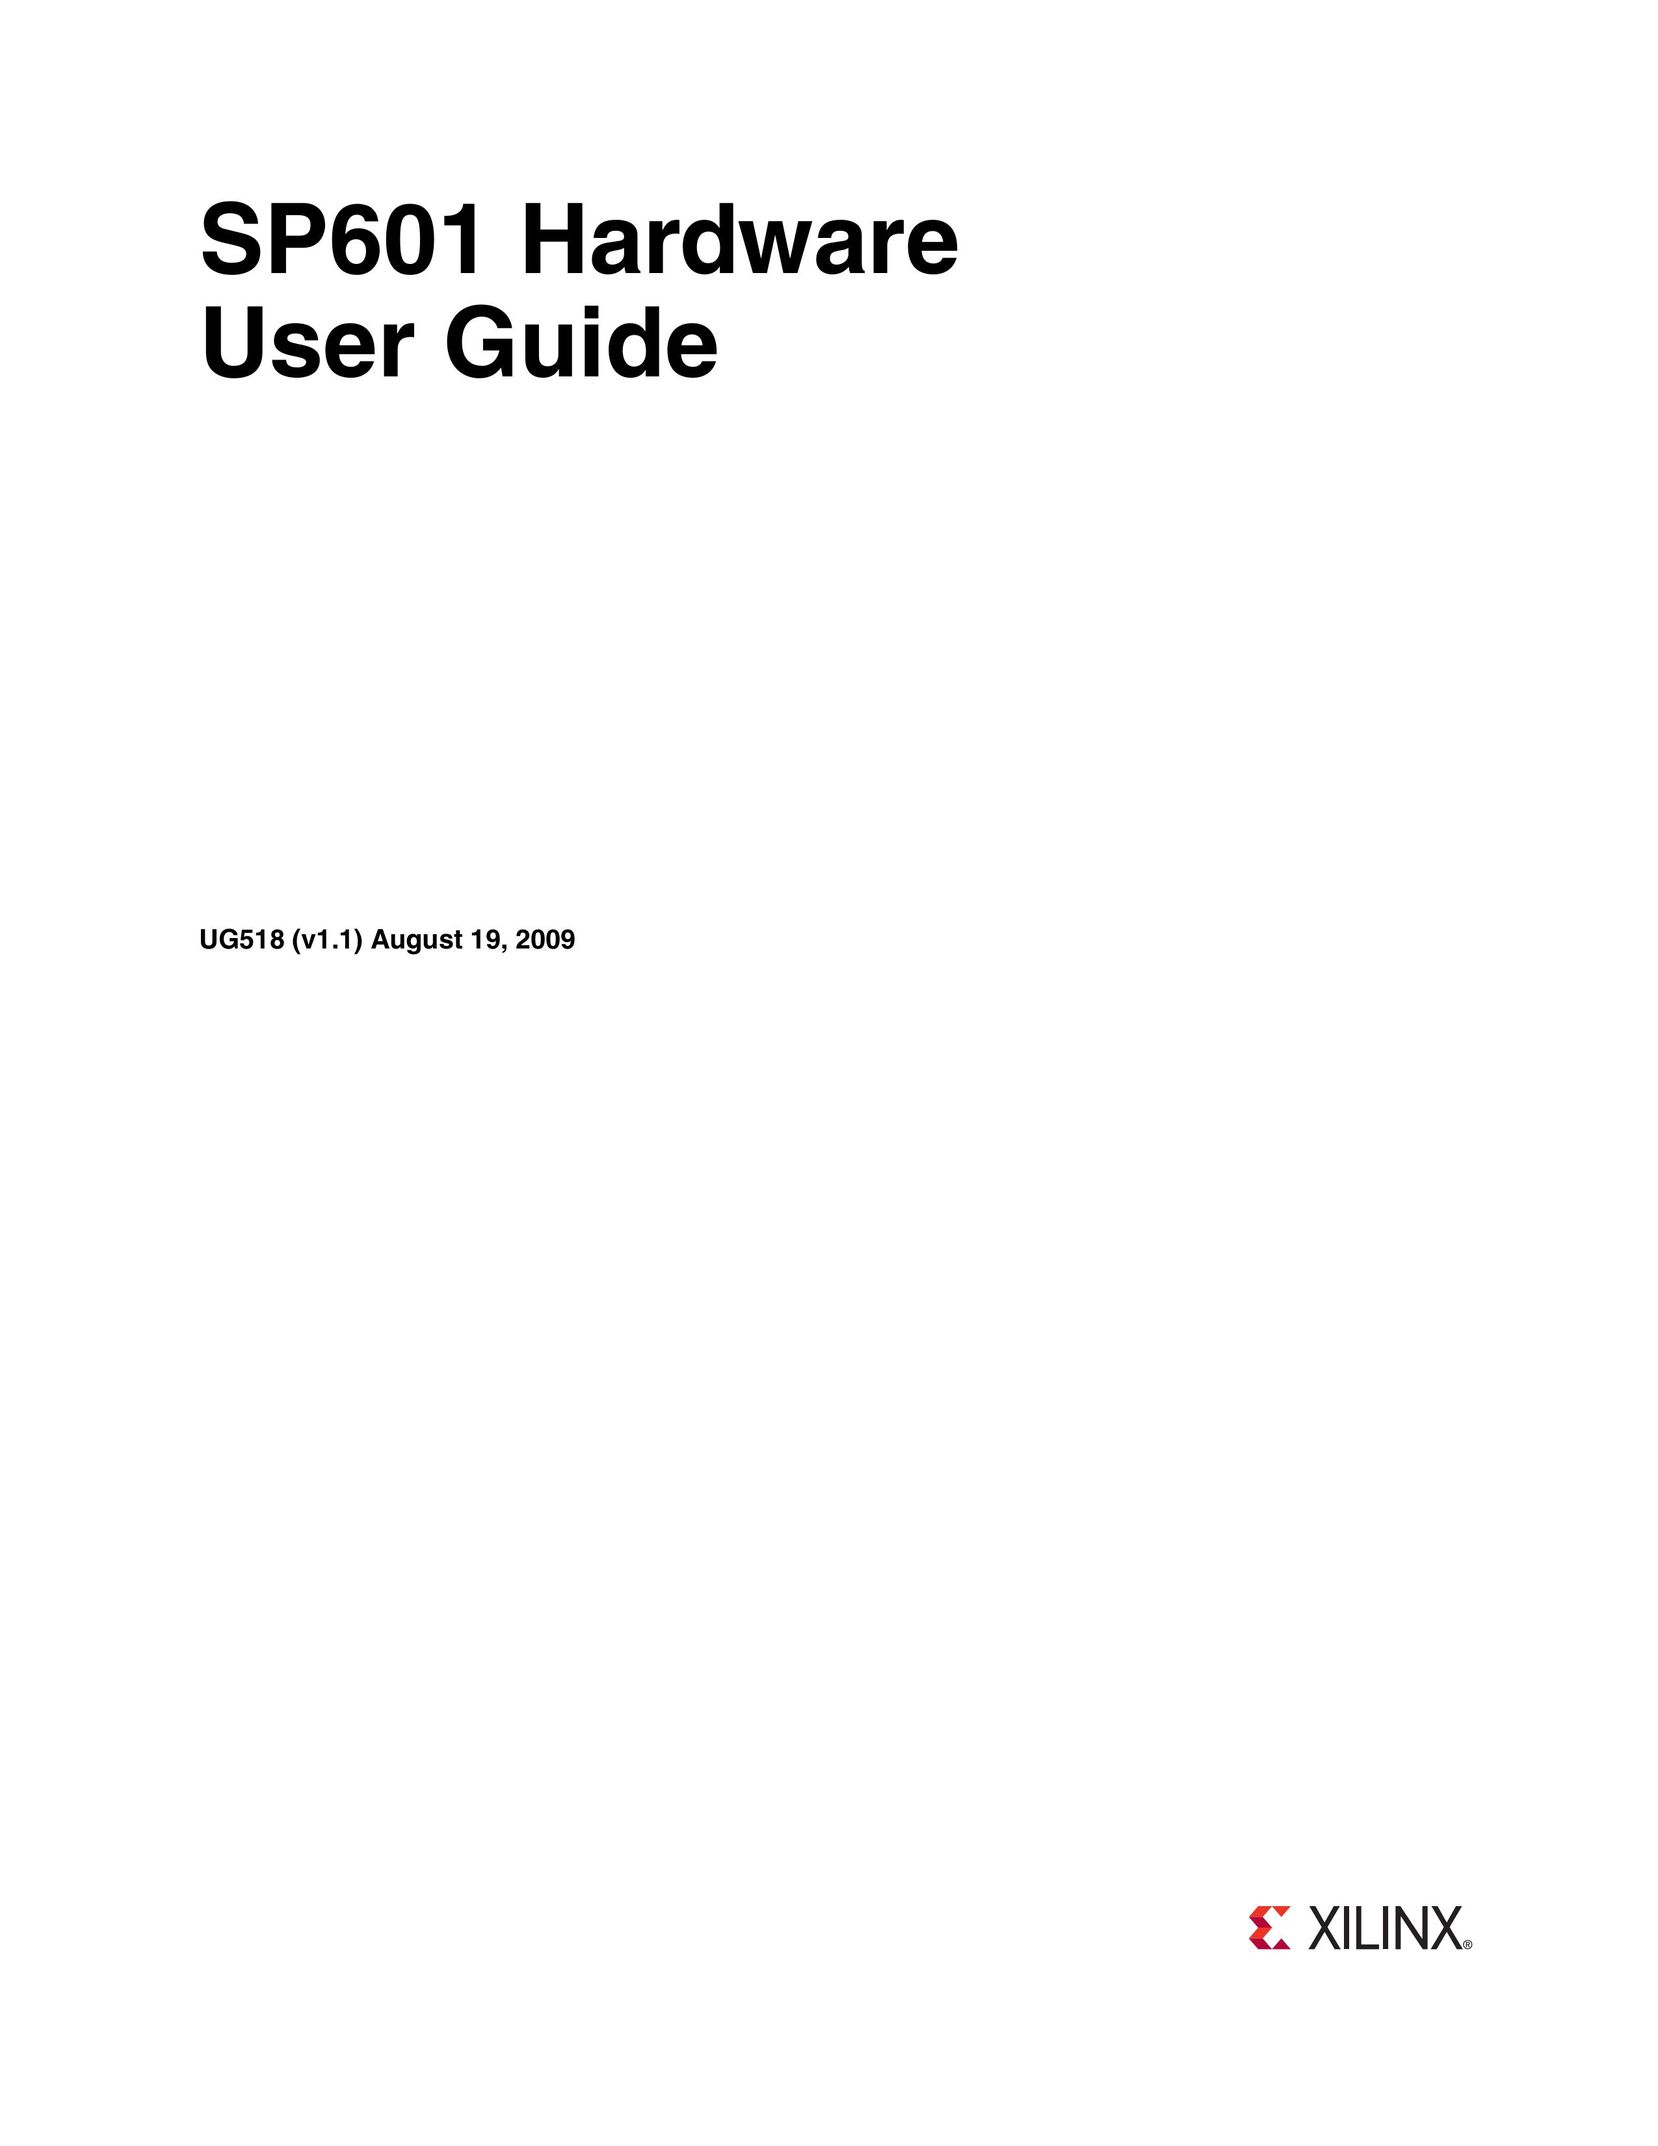 Xilinx UG518 Computer Hardware User Manual